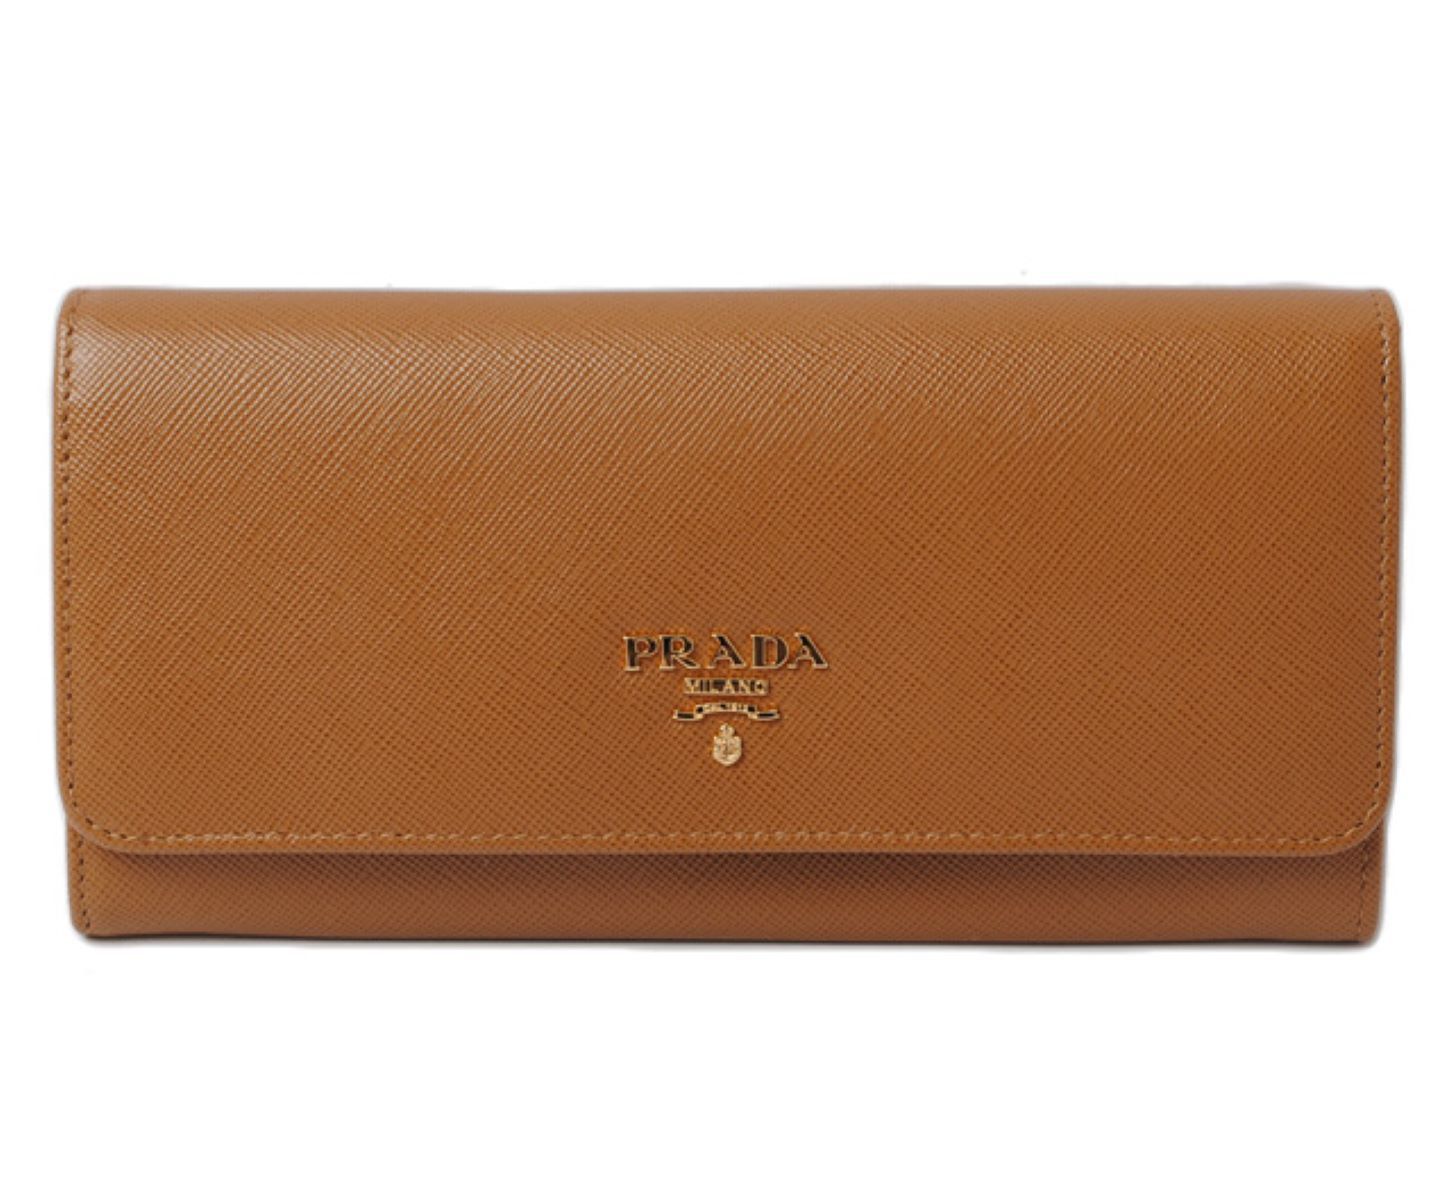 prada saffiano leather continental wallet